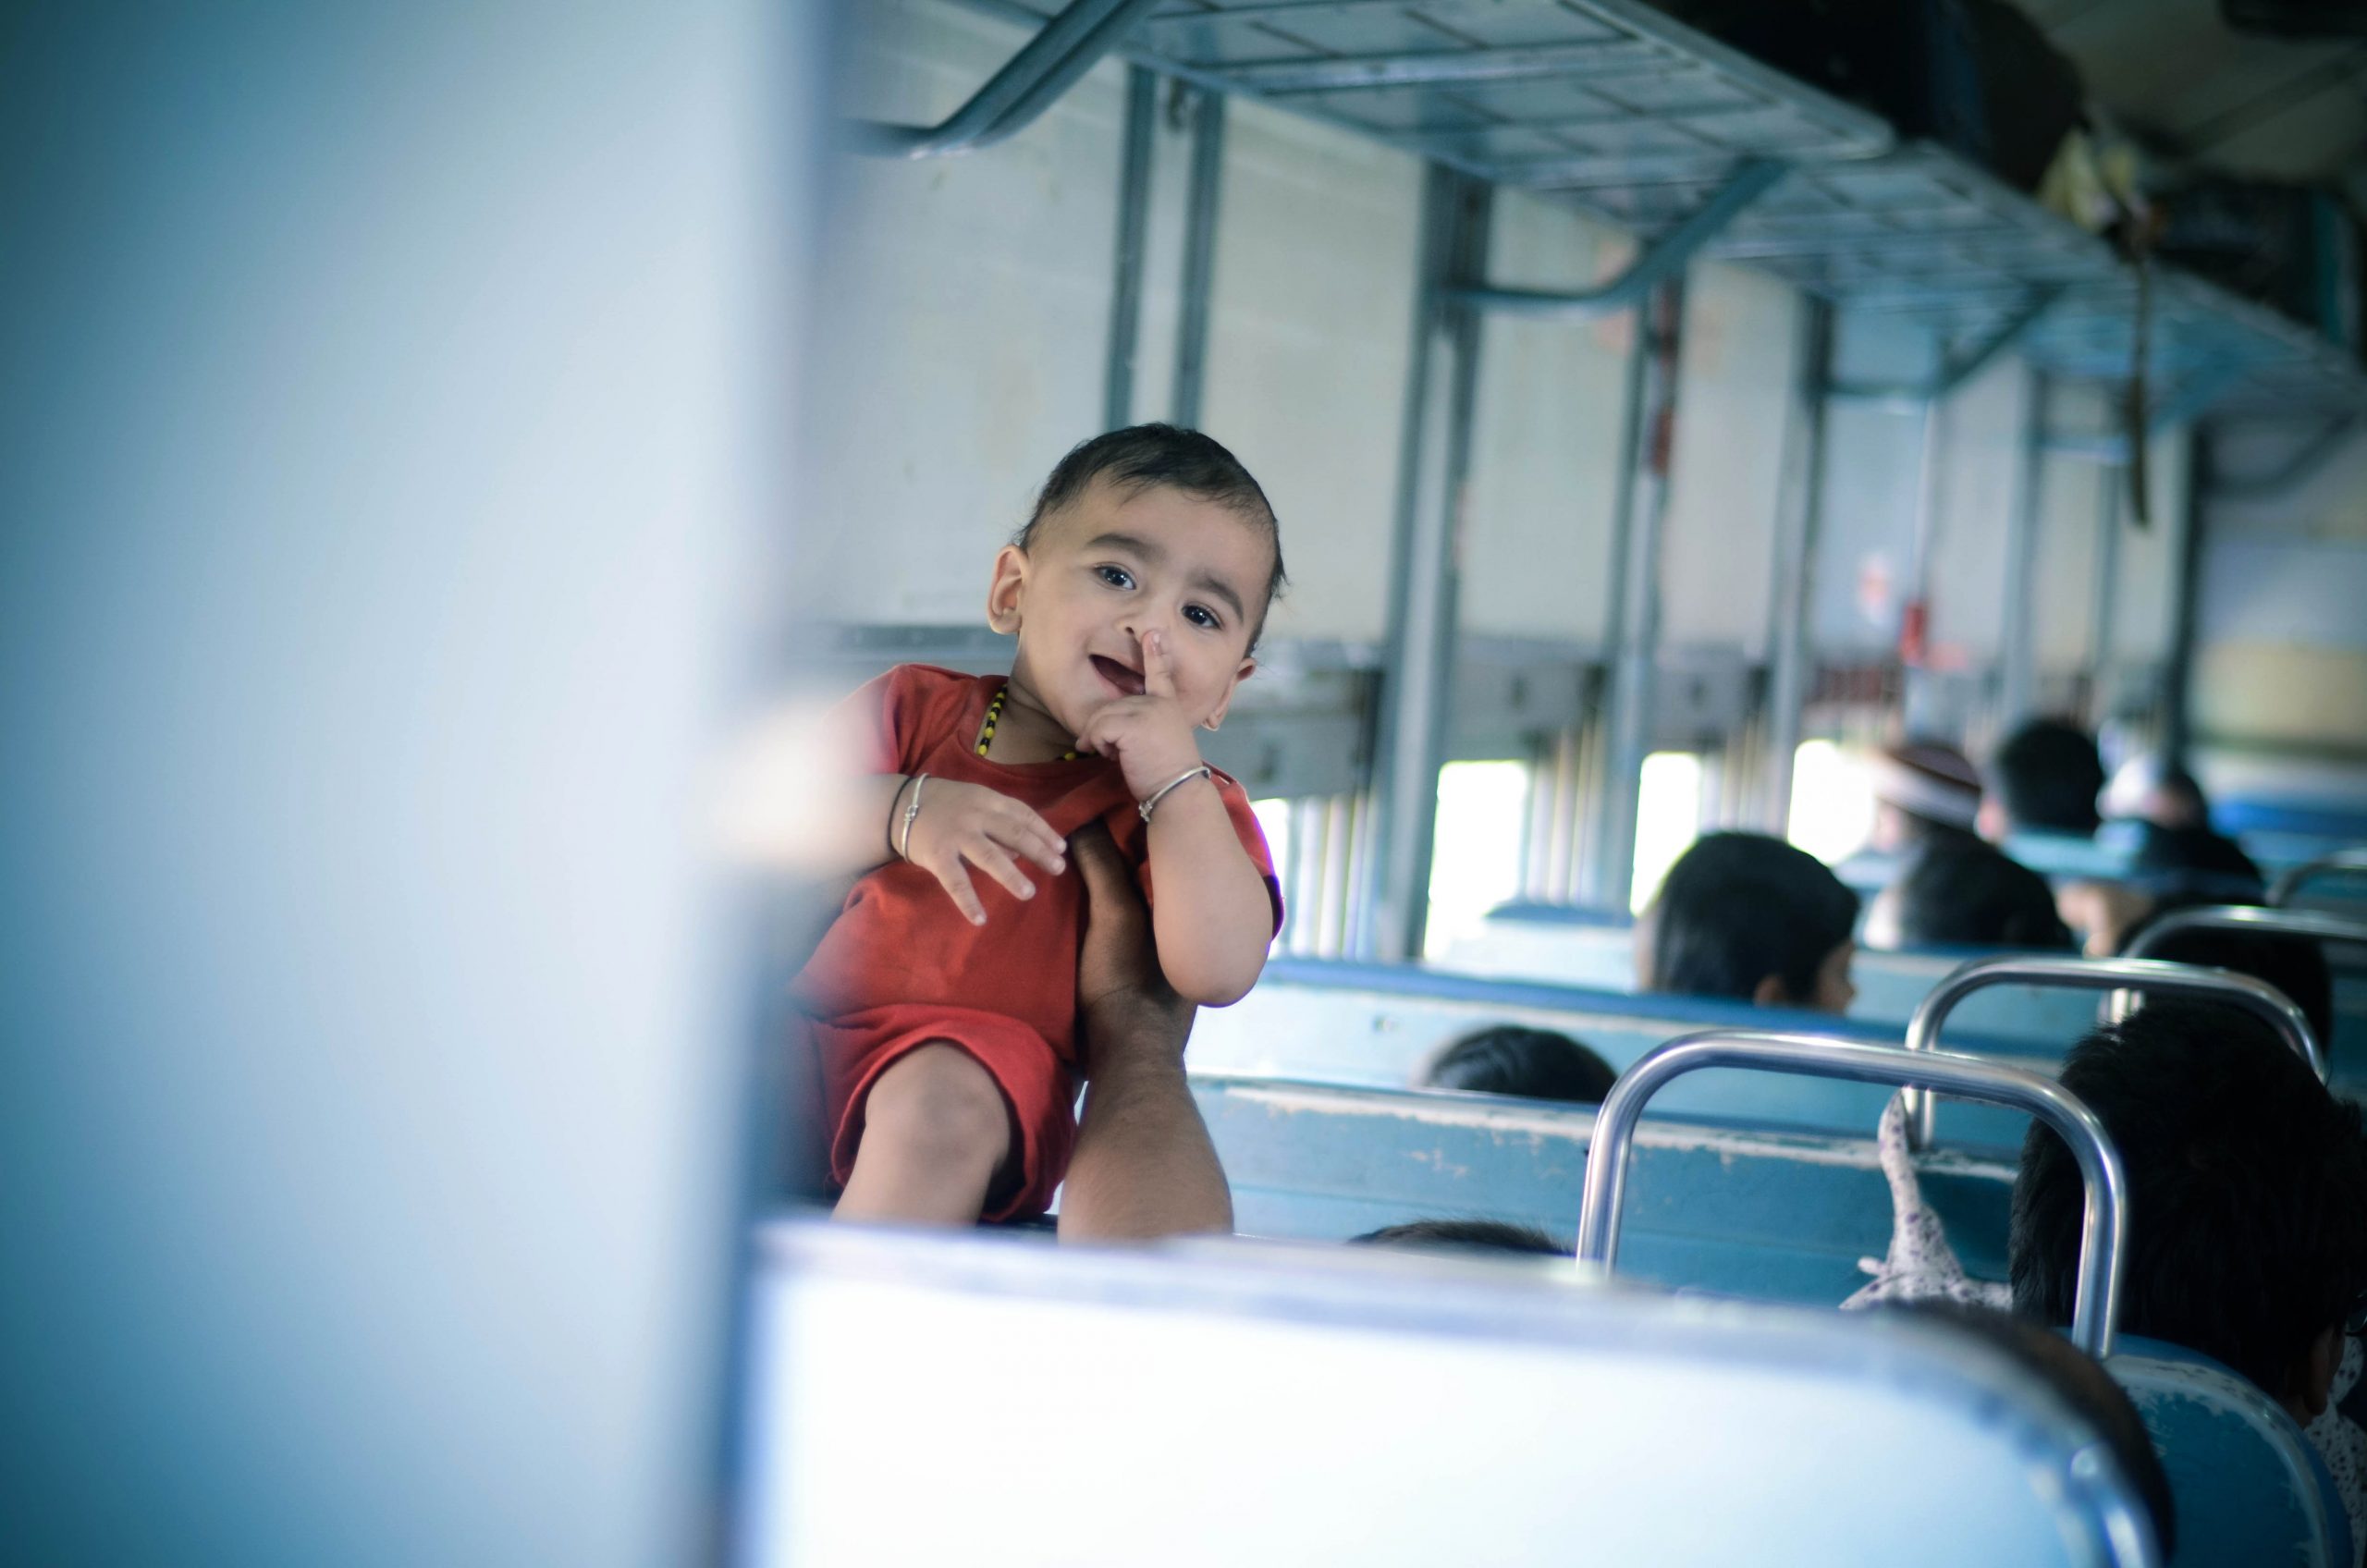 A kid in a passenger train